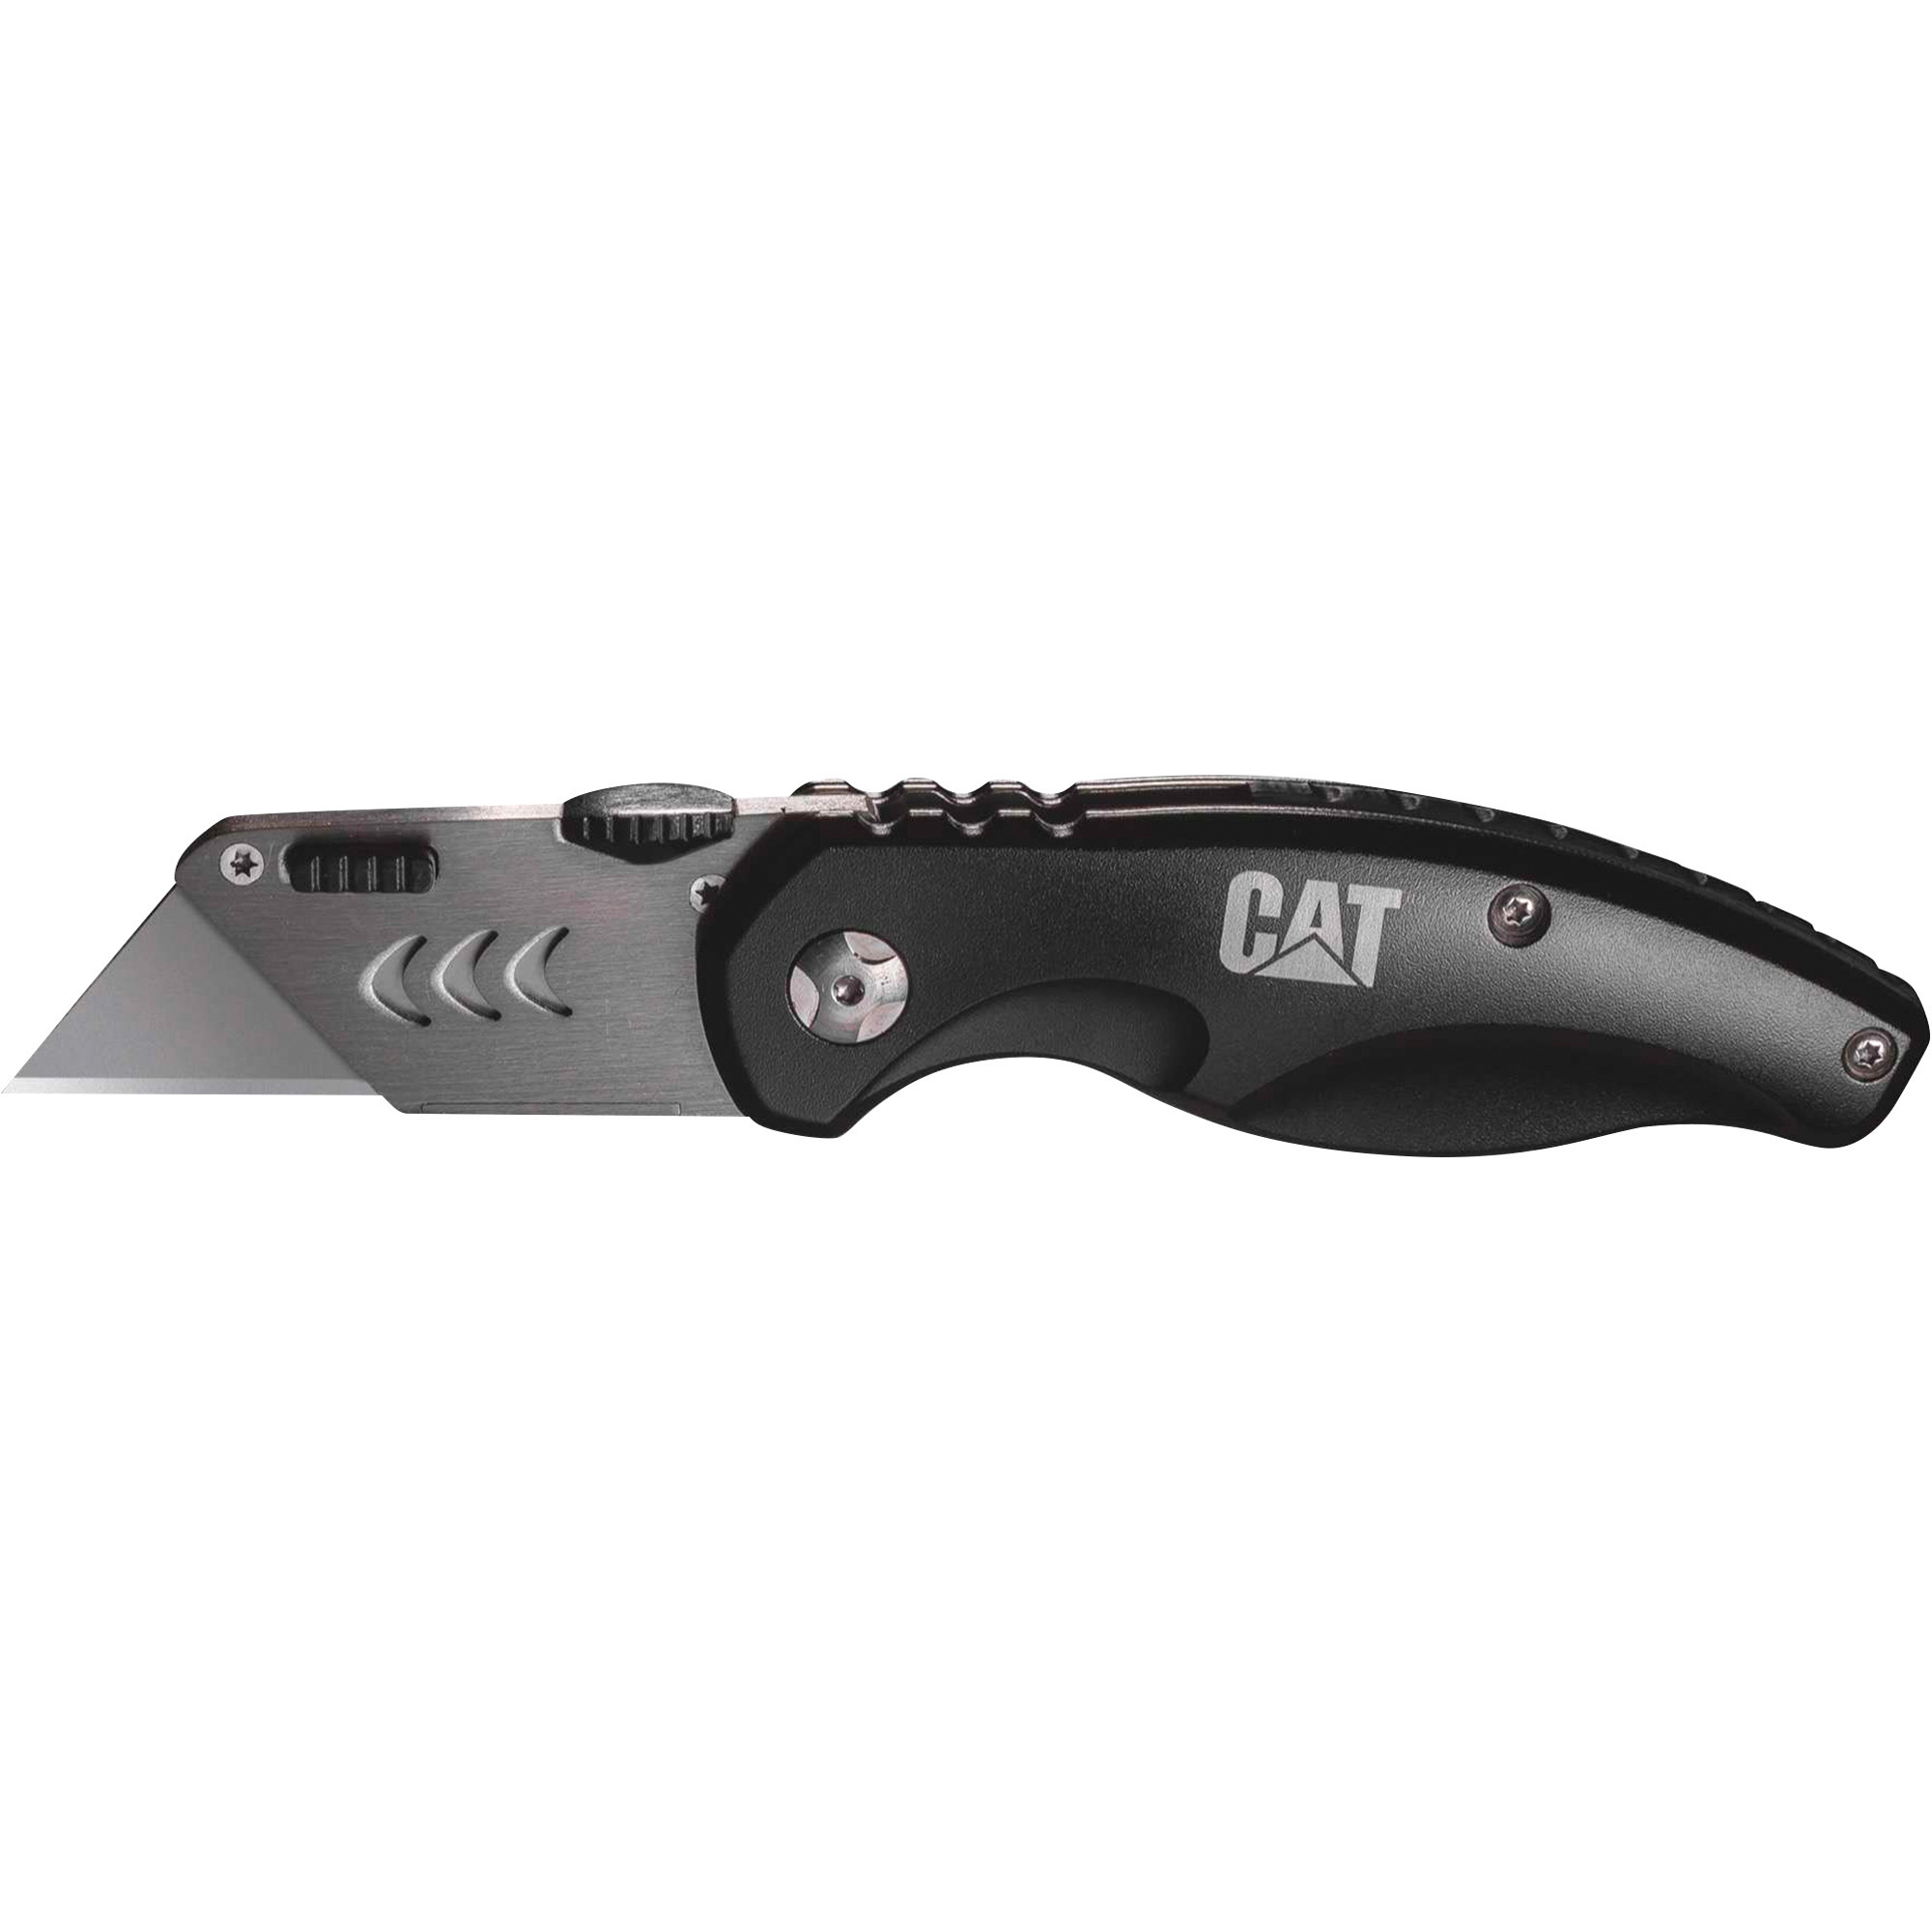 CAT Folding Utility Knife, 6 3/8Inch L, Model 980018